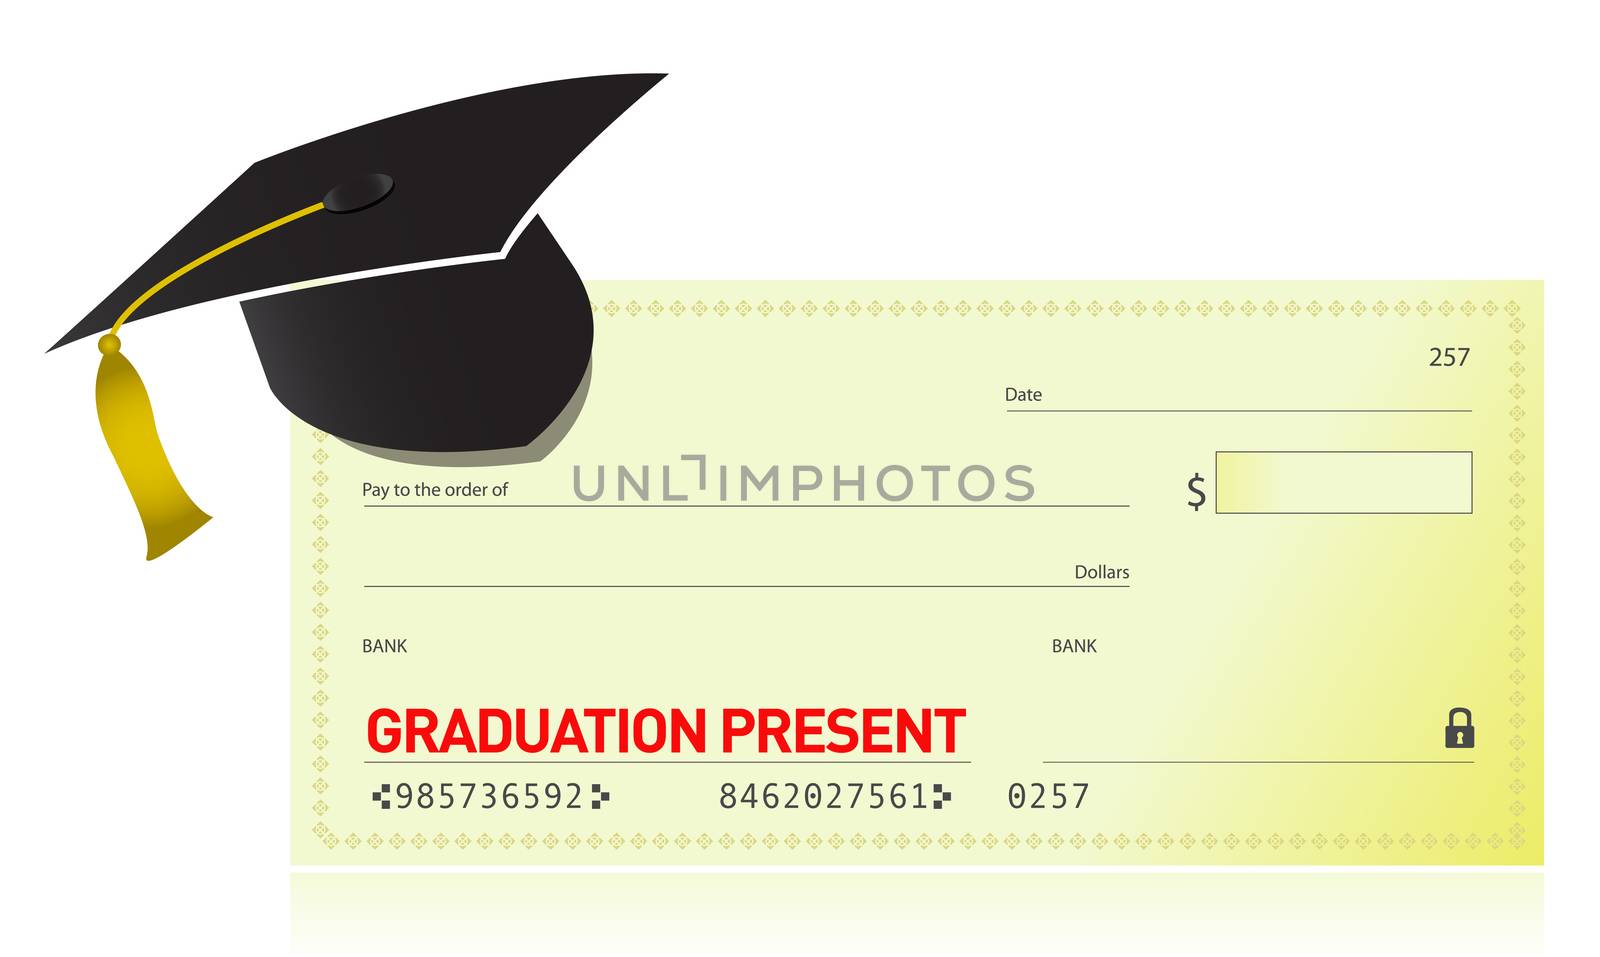 graduation present and graduation hat illustration design